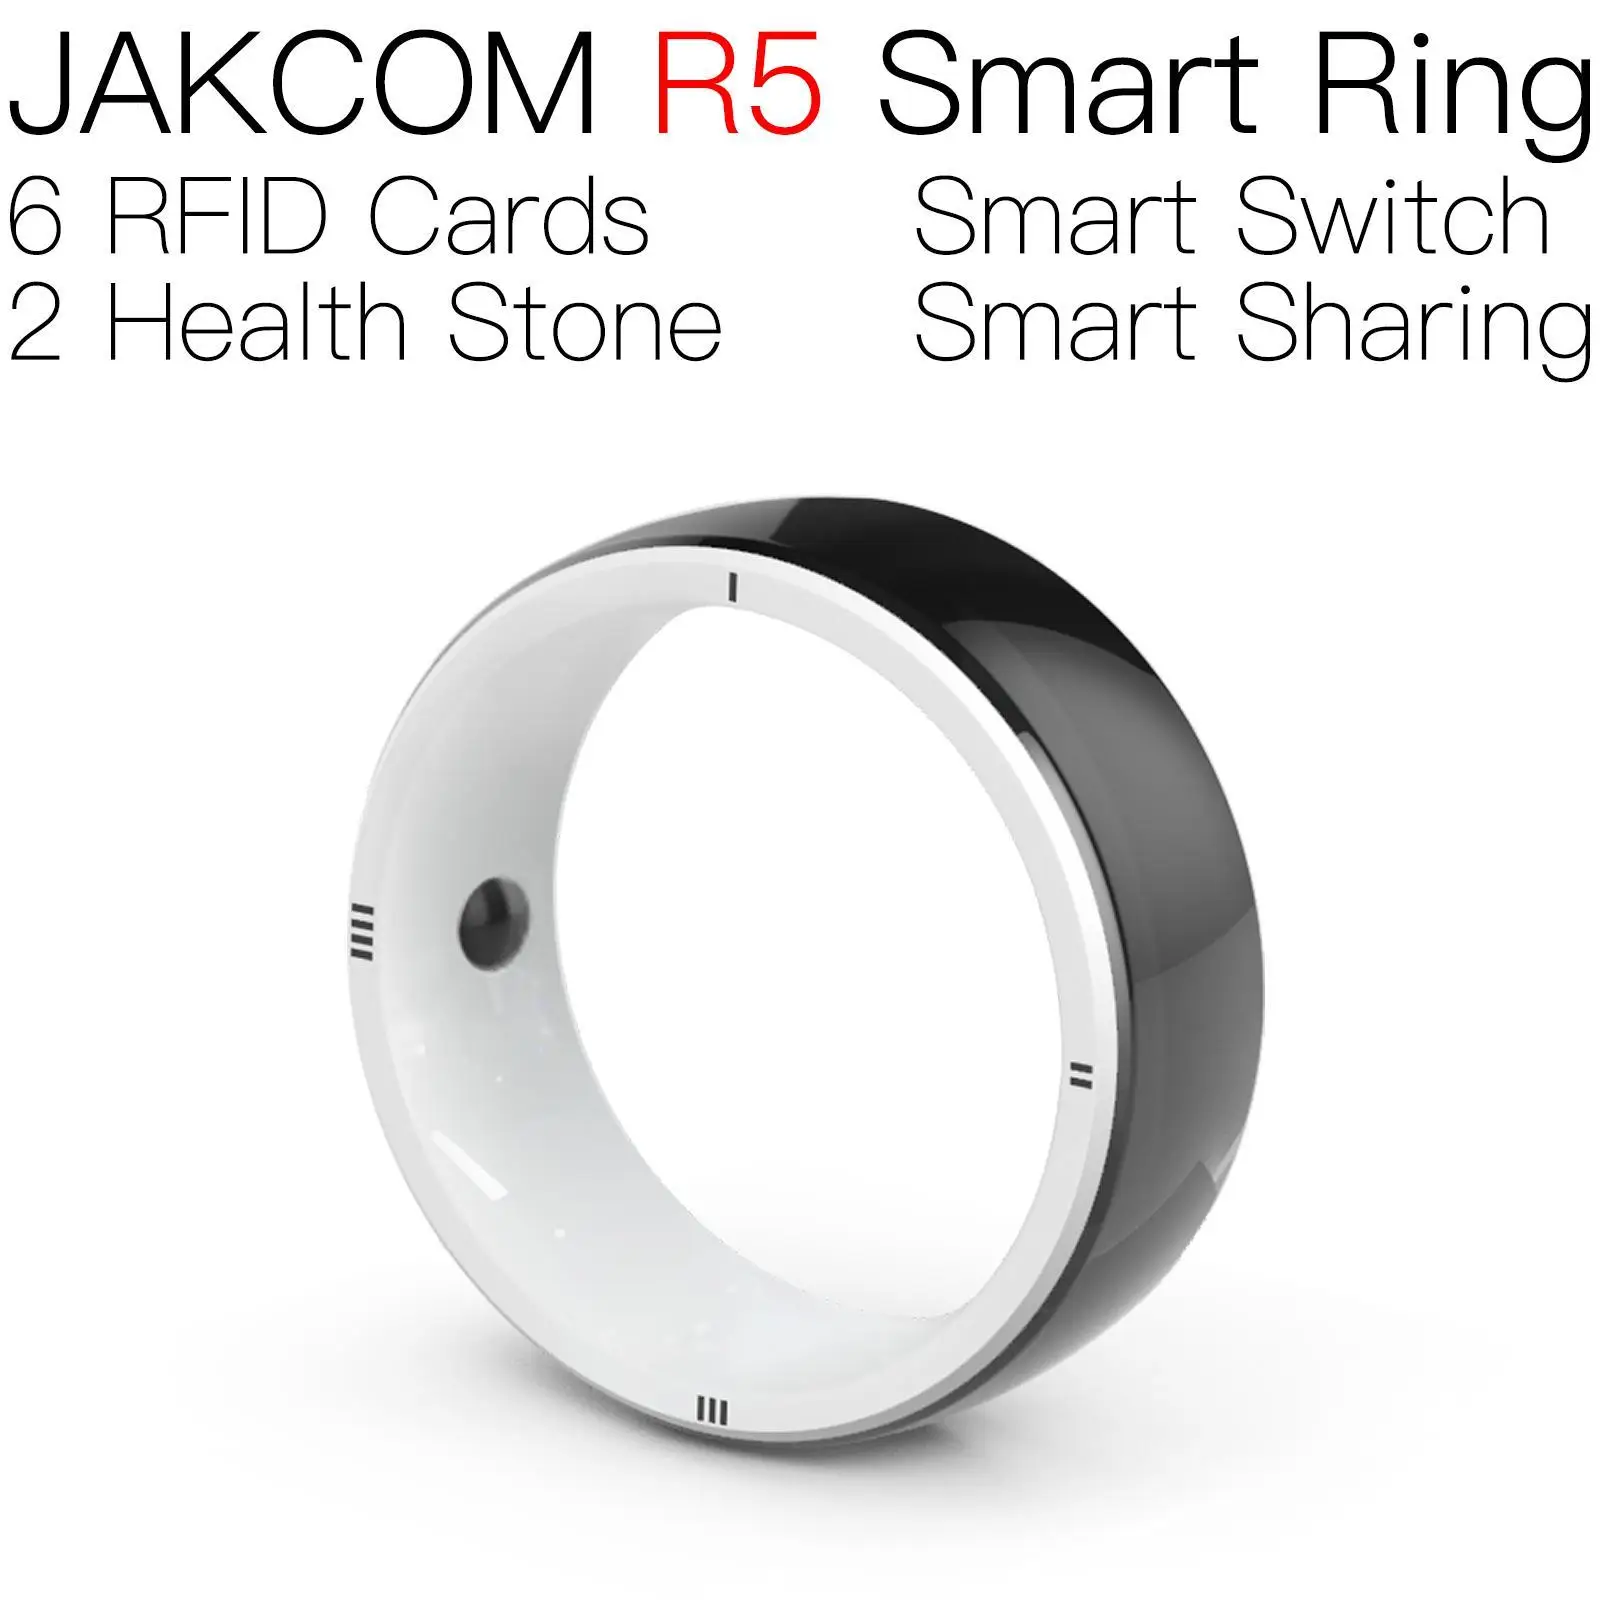 

JAKCOM R5 Smart Ring Nice than verge nothing smart gadget for home bank air purifier 3h men watch free shipping